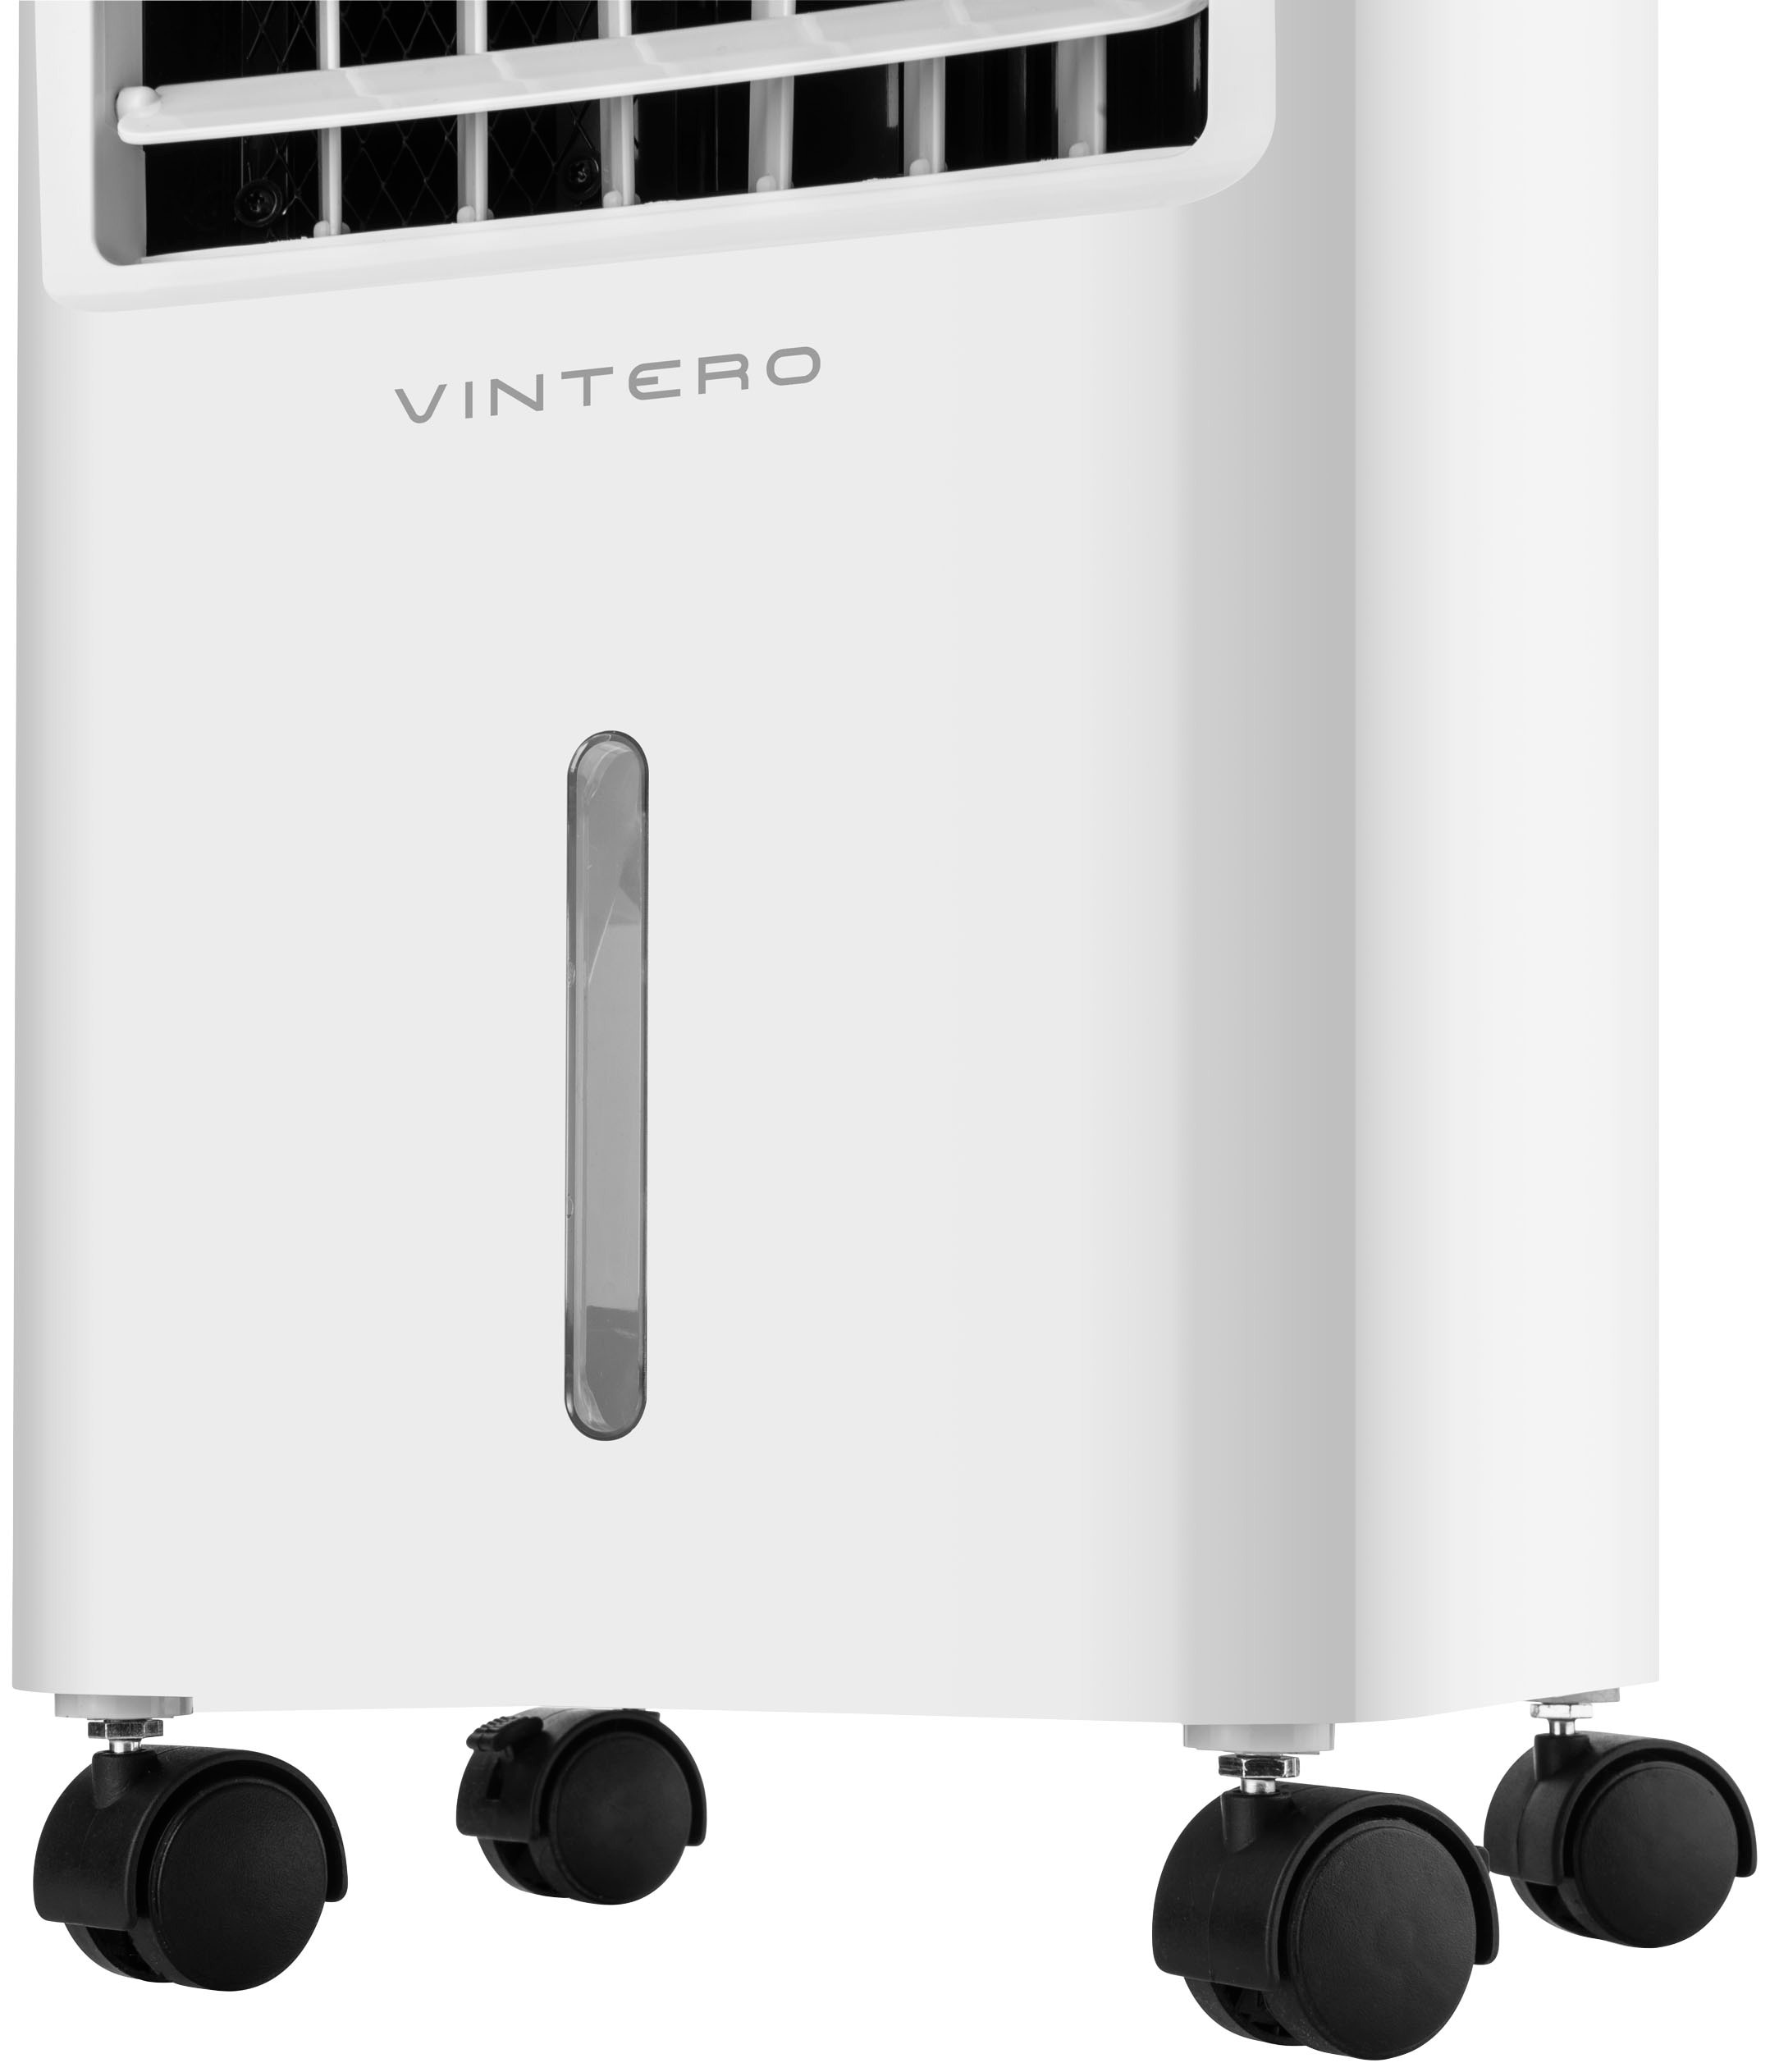 eta Ventilatorkombigerät »3-in-1 Befeuchter/Ventilator/Kühler "Vintero"«, Luftkühler, 5,6 l Fassungsvermögen